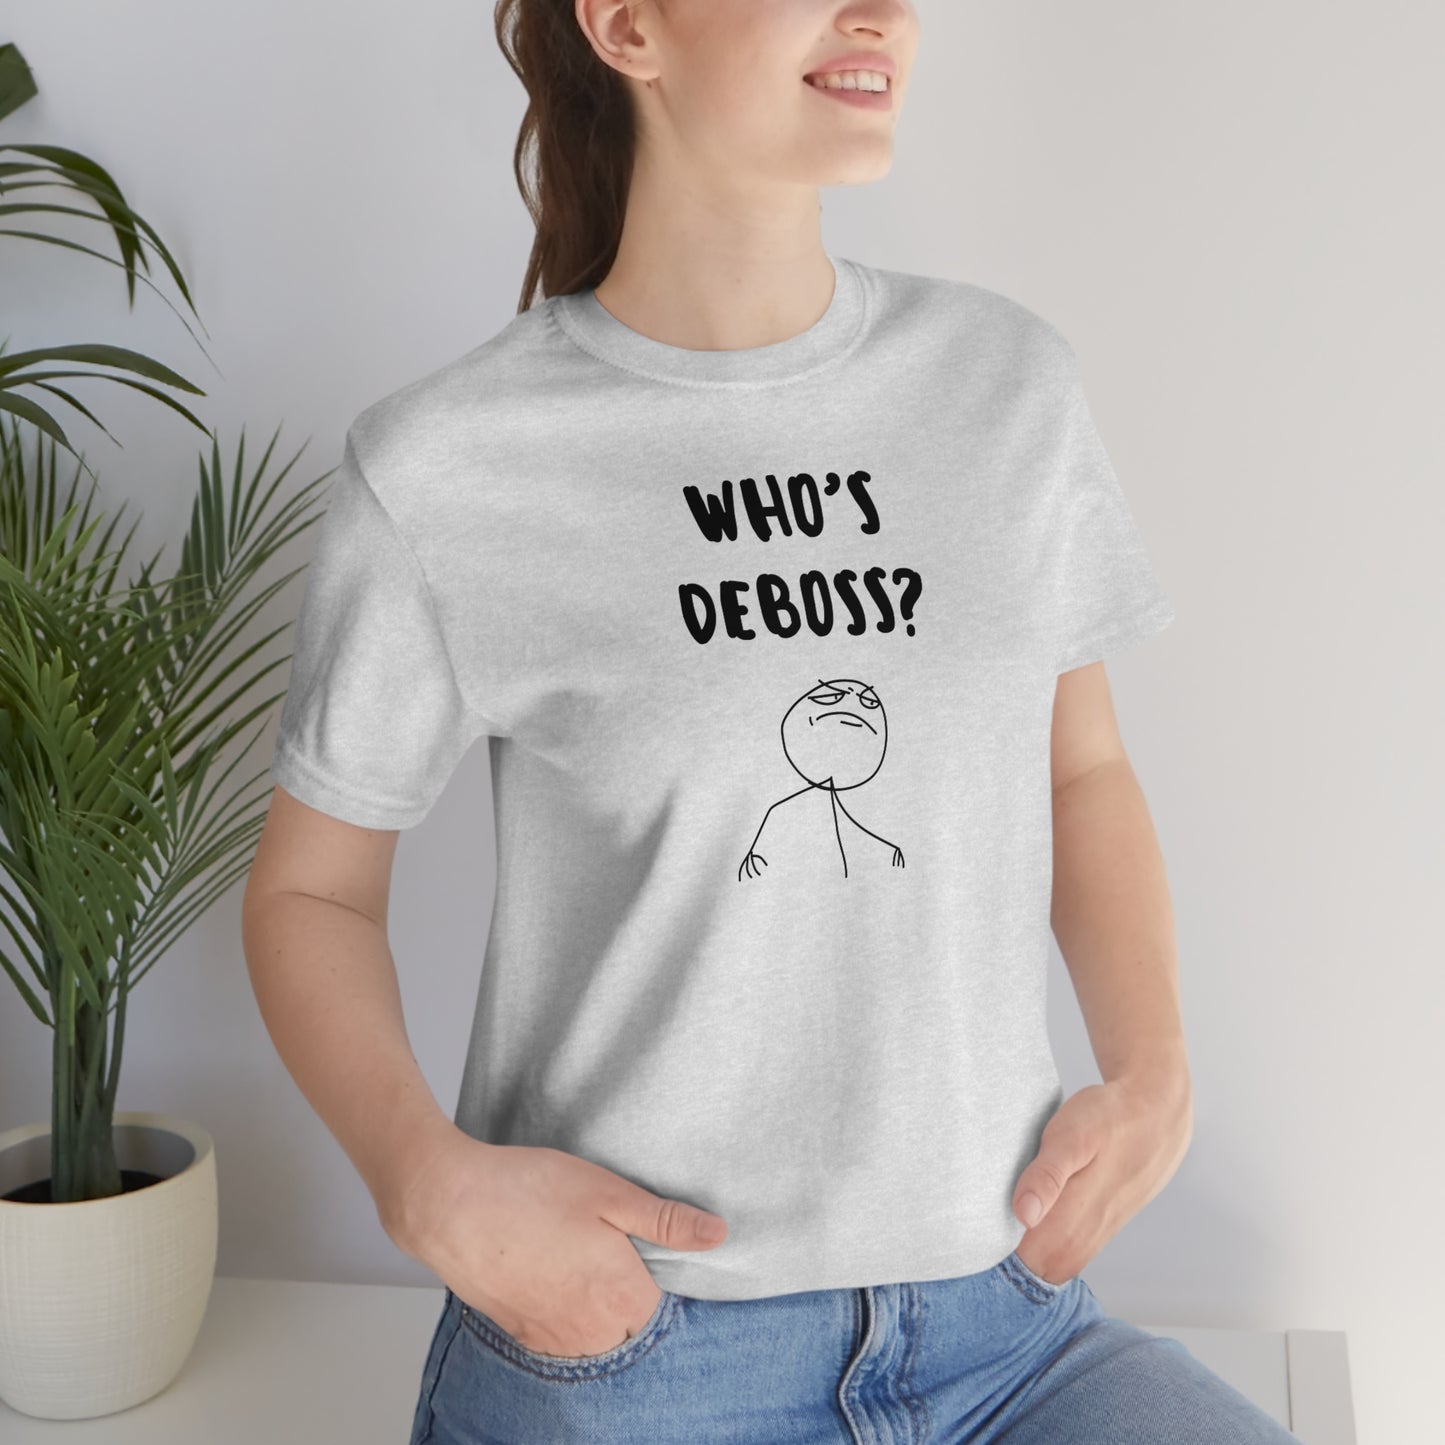 Who's Deboss? T-Shirt